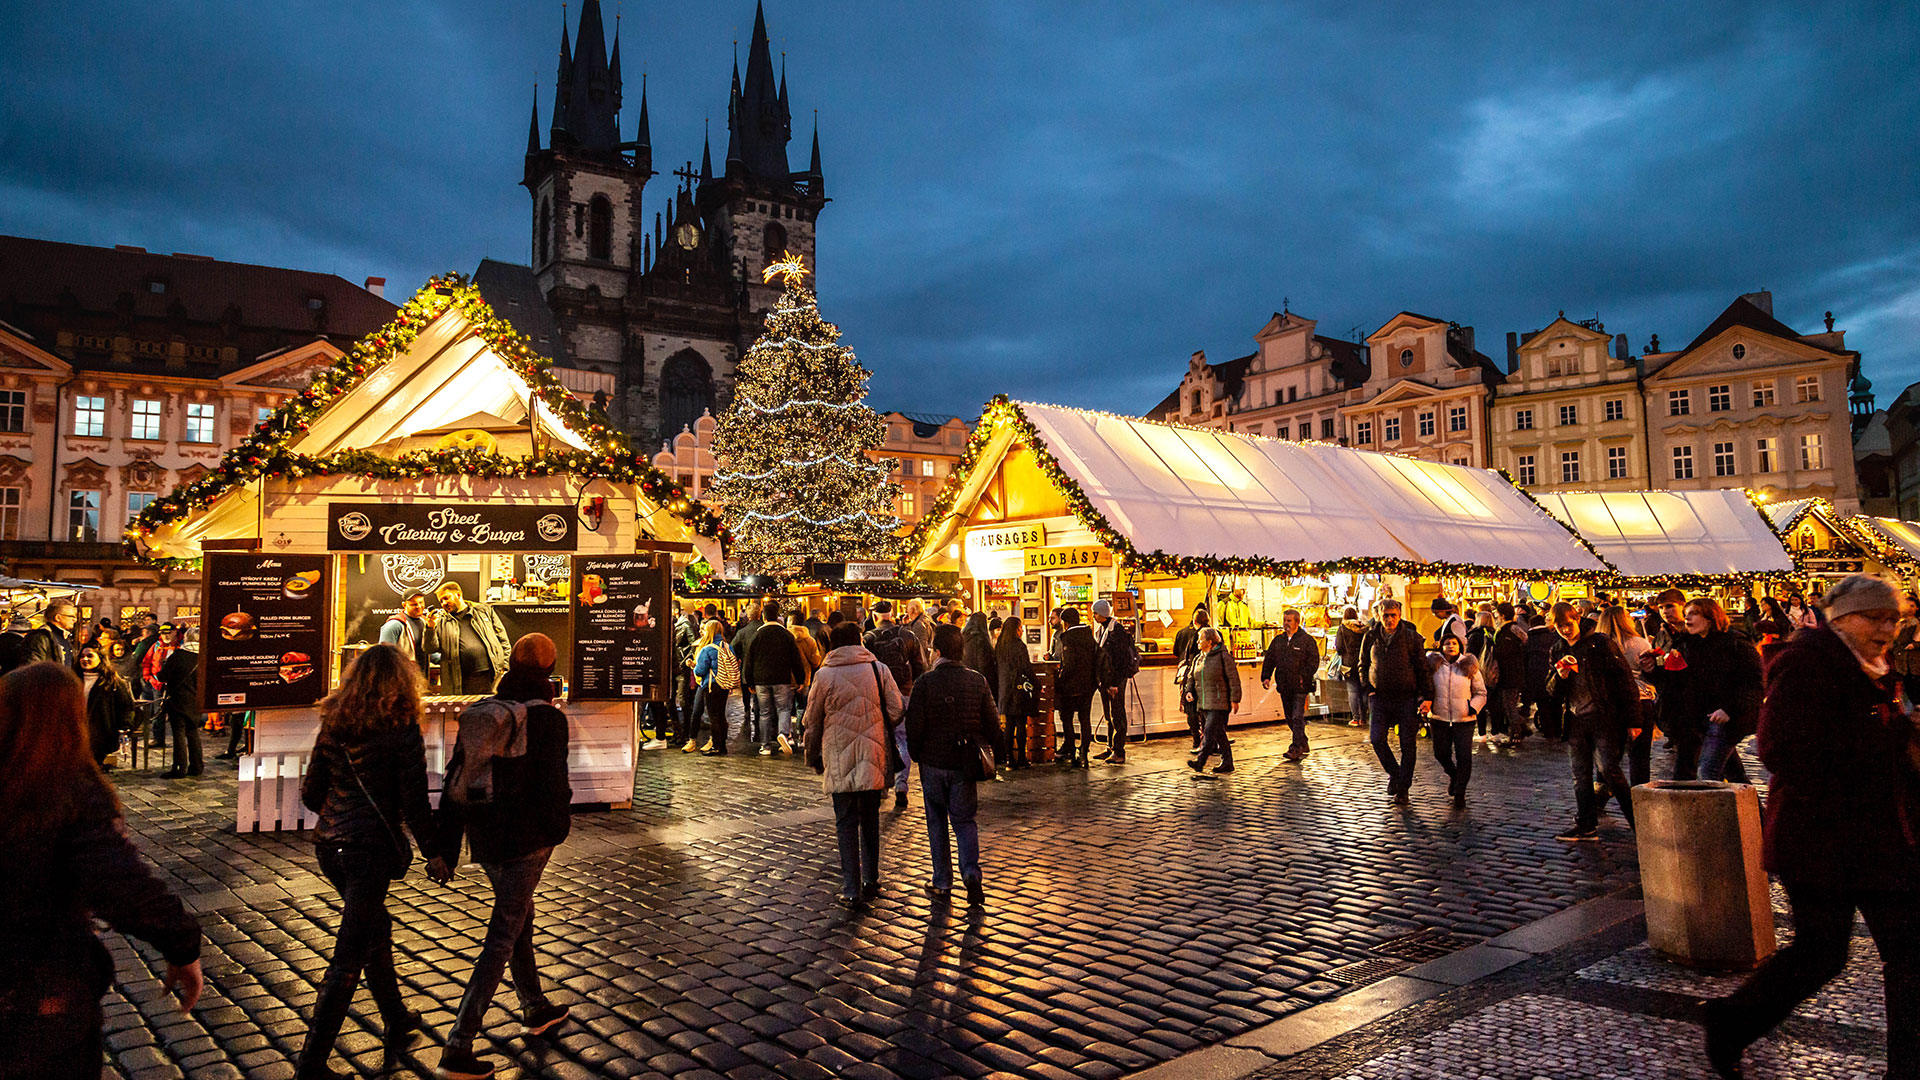 Prague's Old Town Christmas market